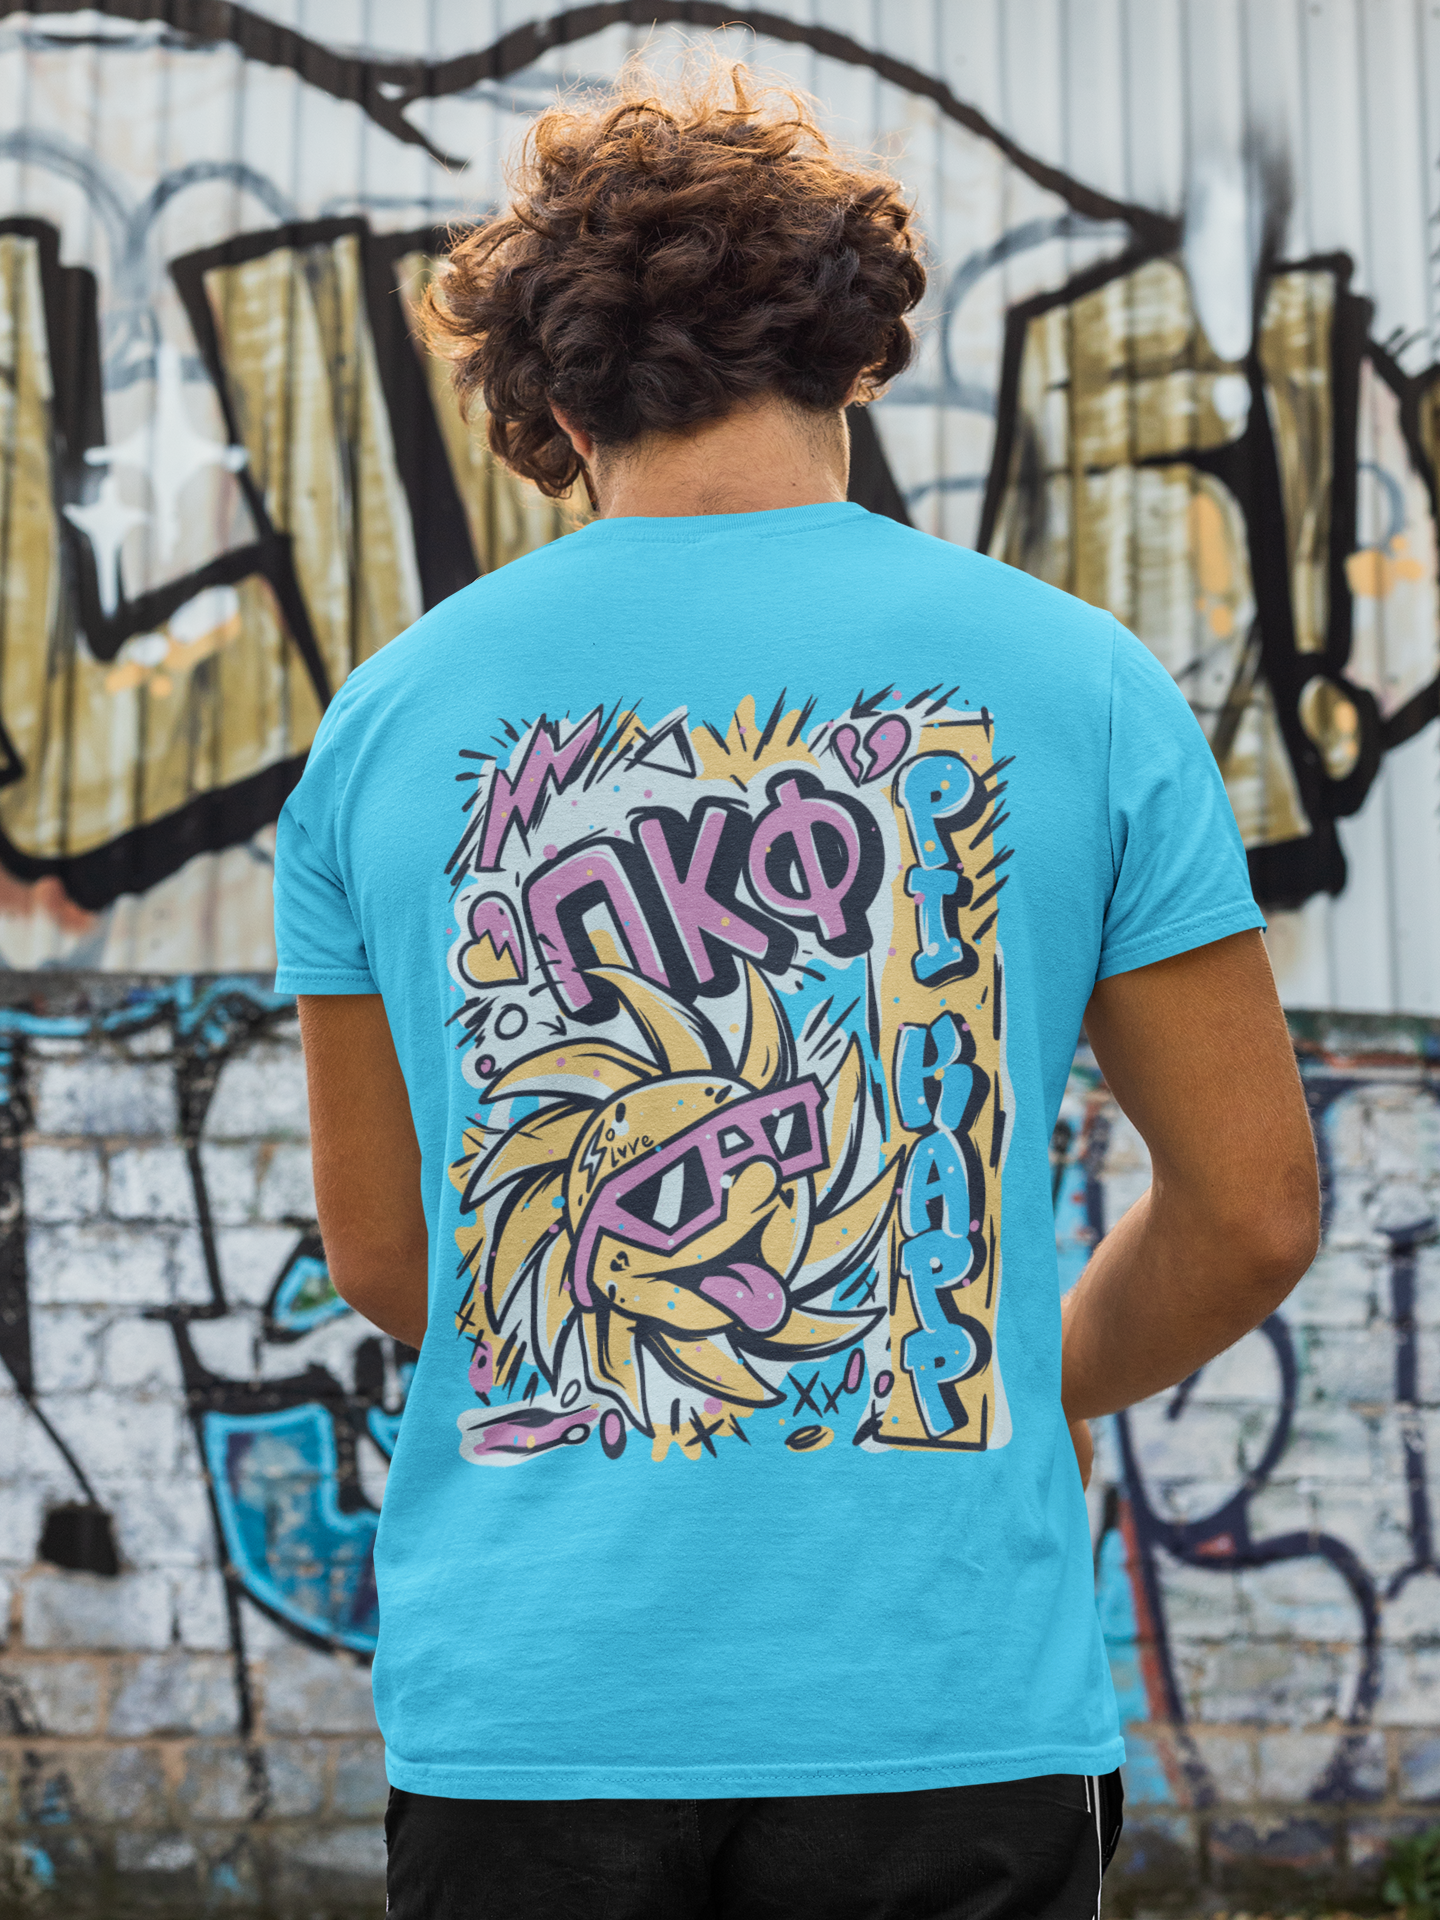 Pi Kappa Phi Graphic T-Shirt | Fun in the Sun | Pi Kappa Phi Apparel and Merchandise back model 